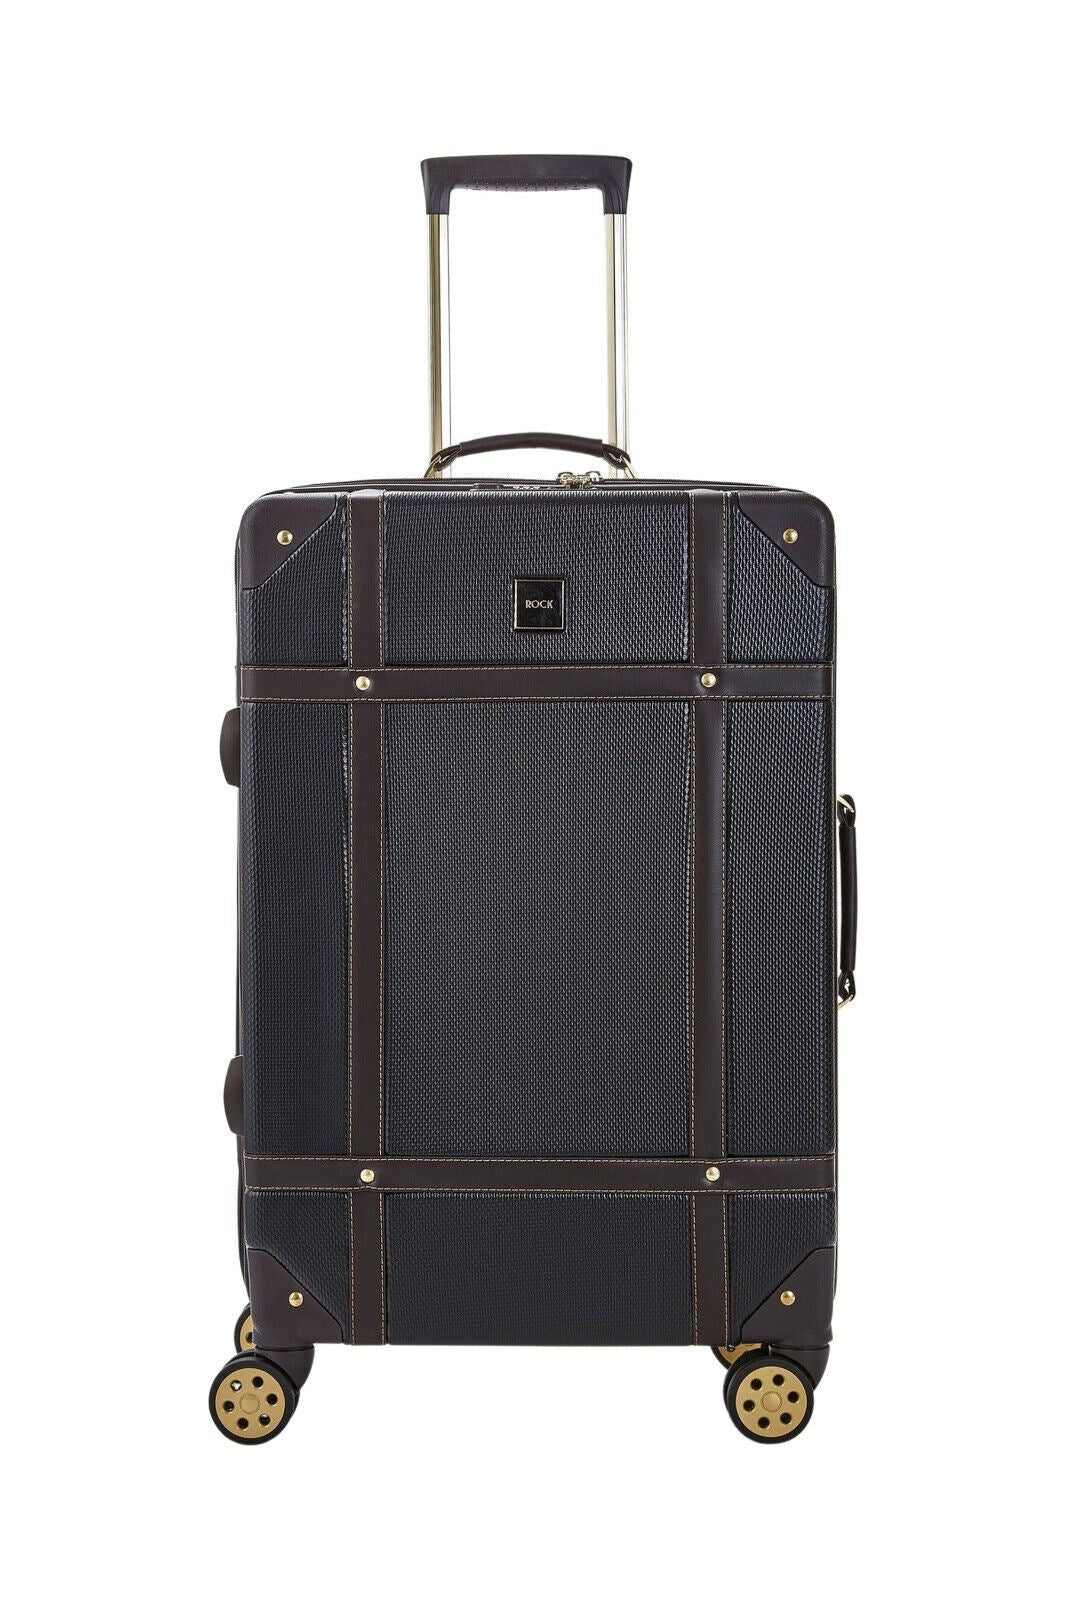 Alexandria Medium Hard Shell Suitcase in Black